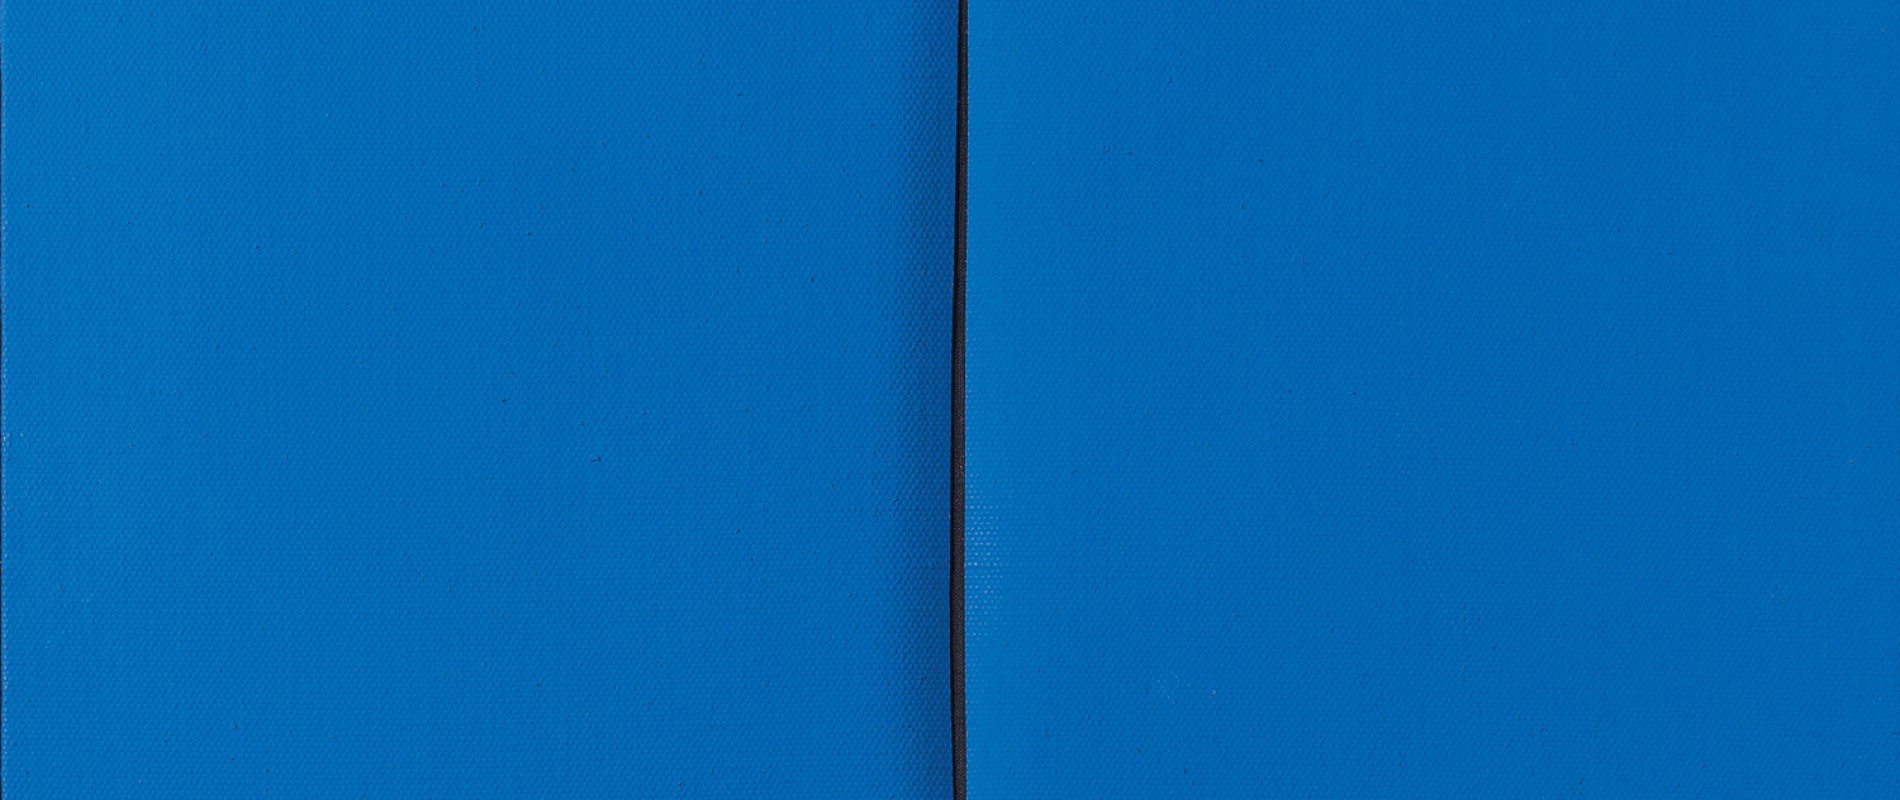 Concetto Spaziale, Attesa, 1967-1968, waterpaint on canvas, 46 x 55 cm